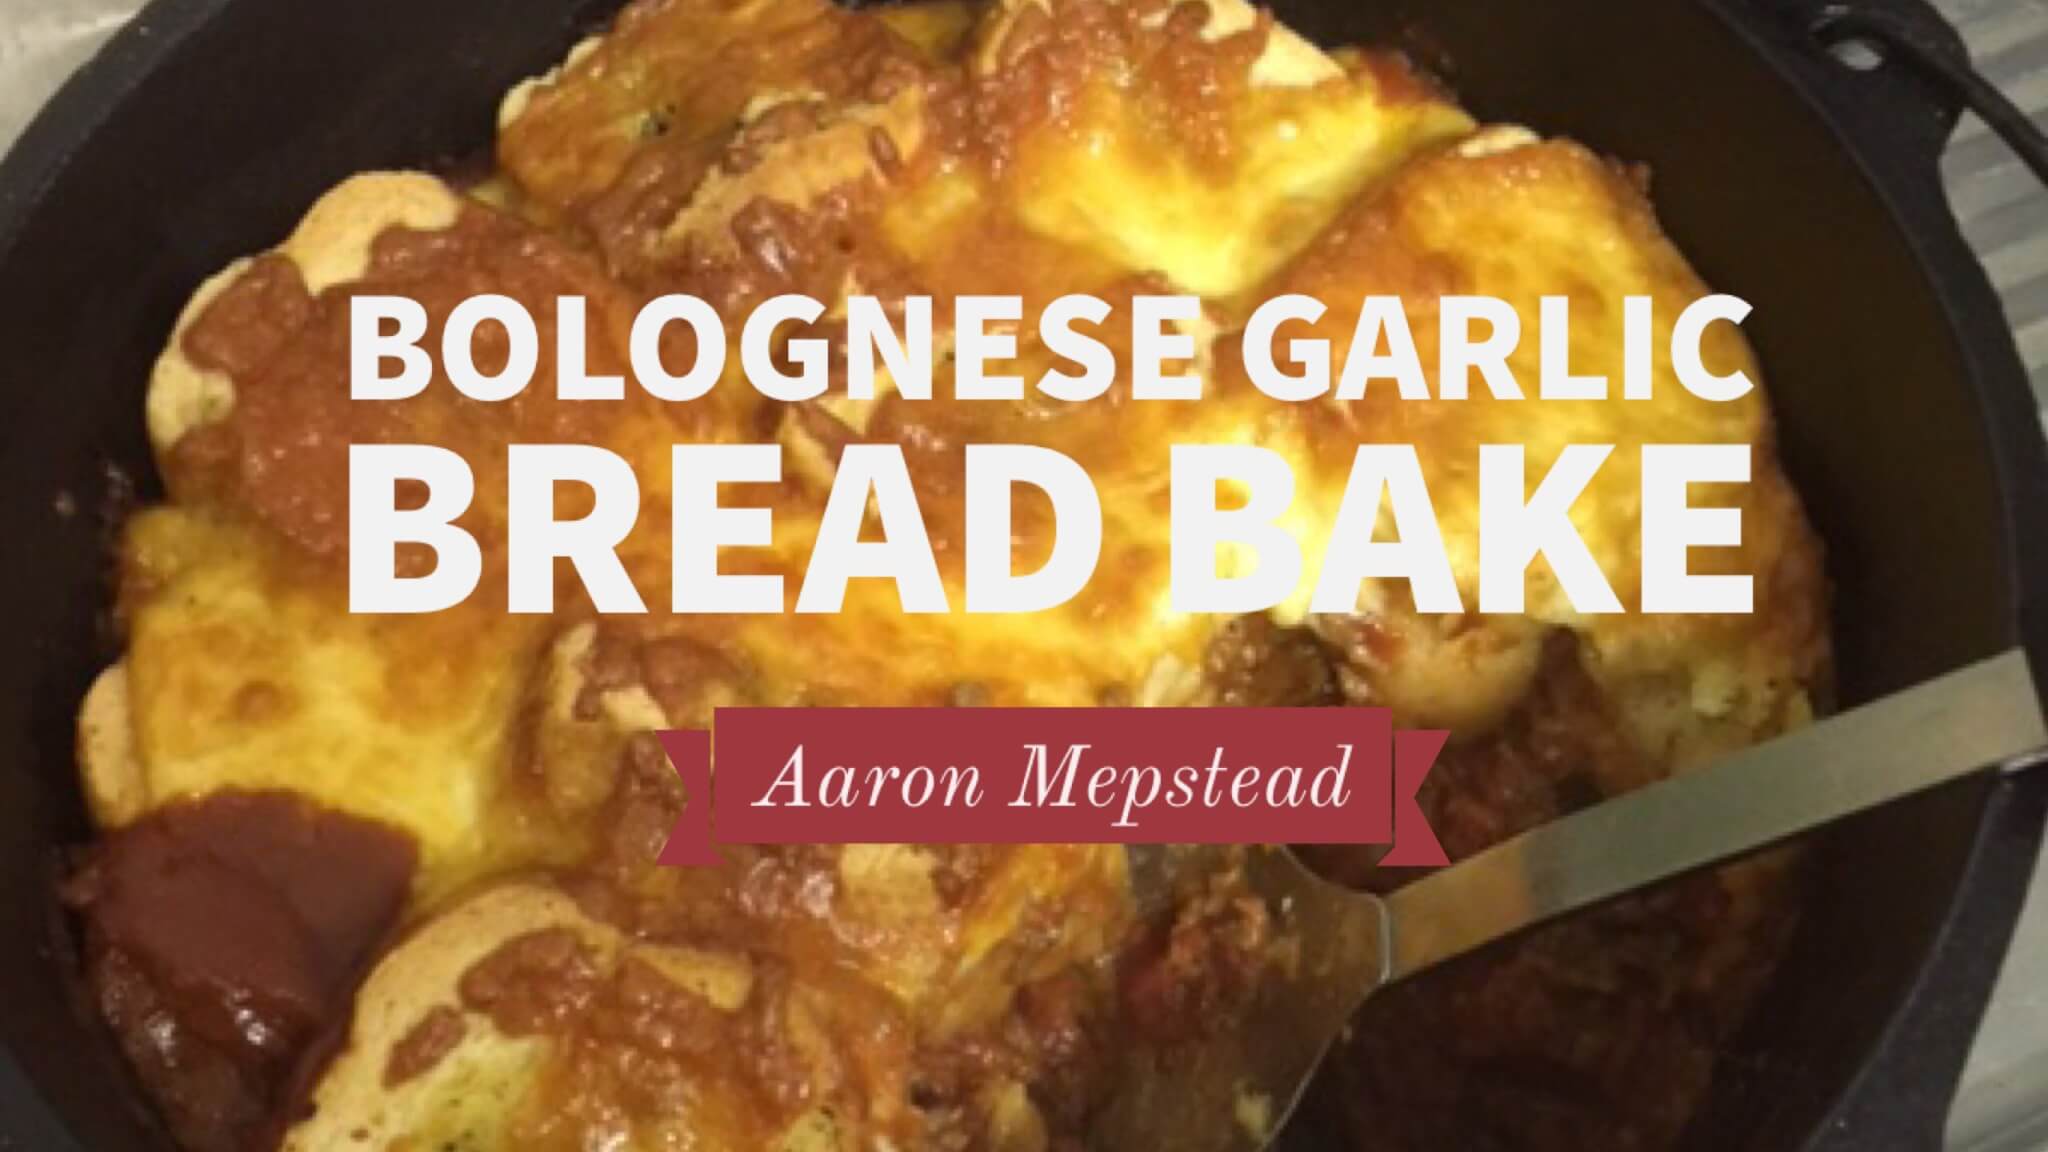 Bolognese Garlic Bread Bake | Aaron Mepstead